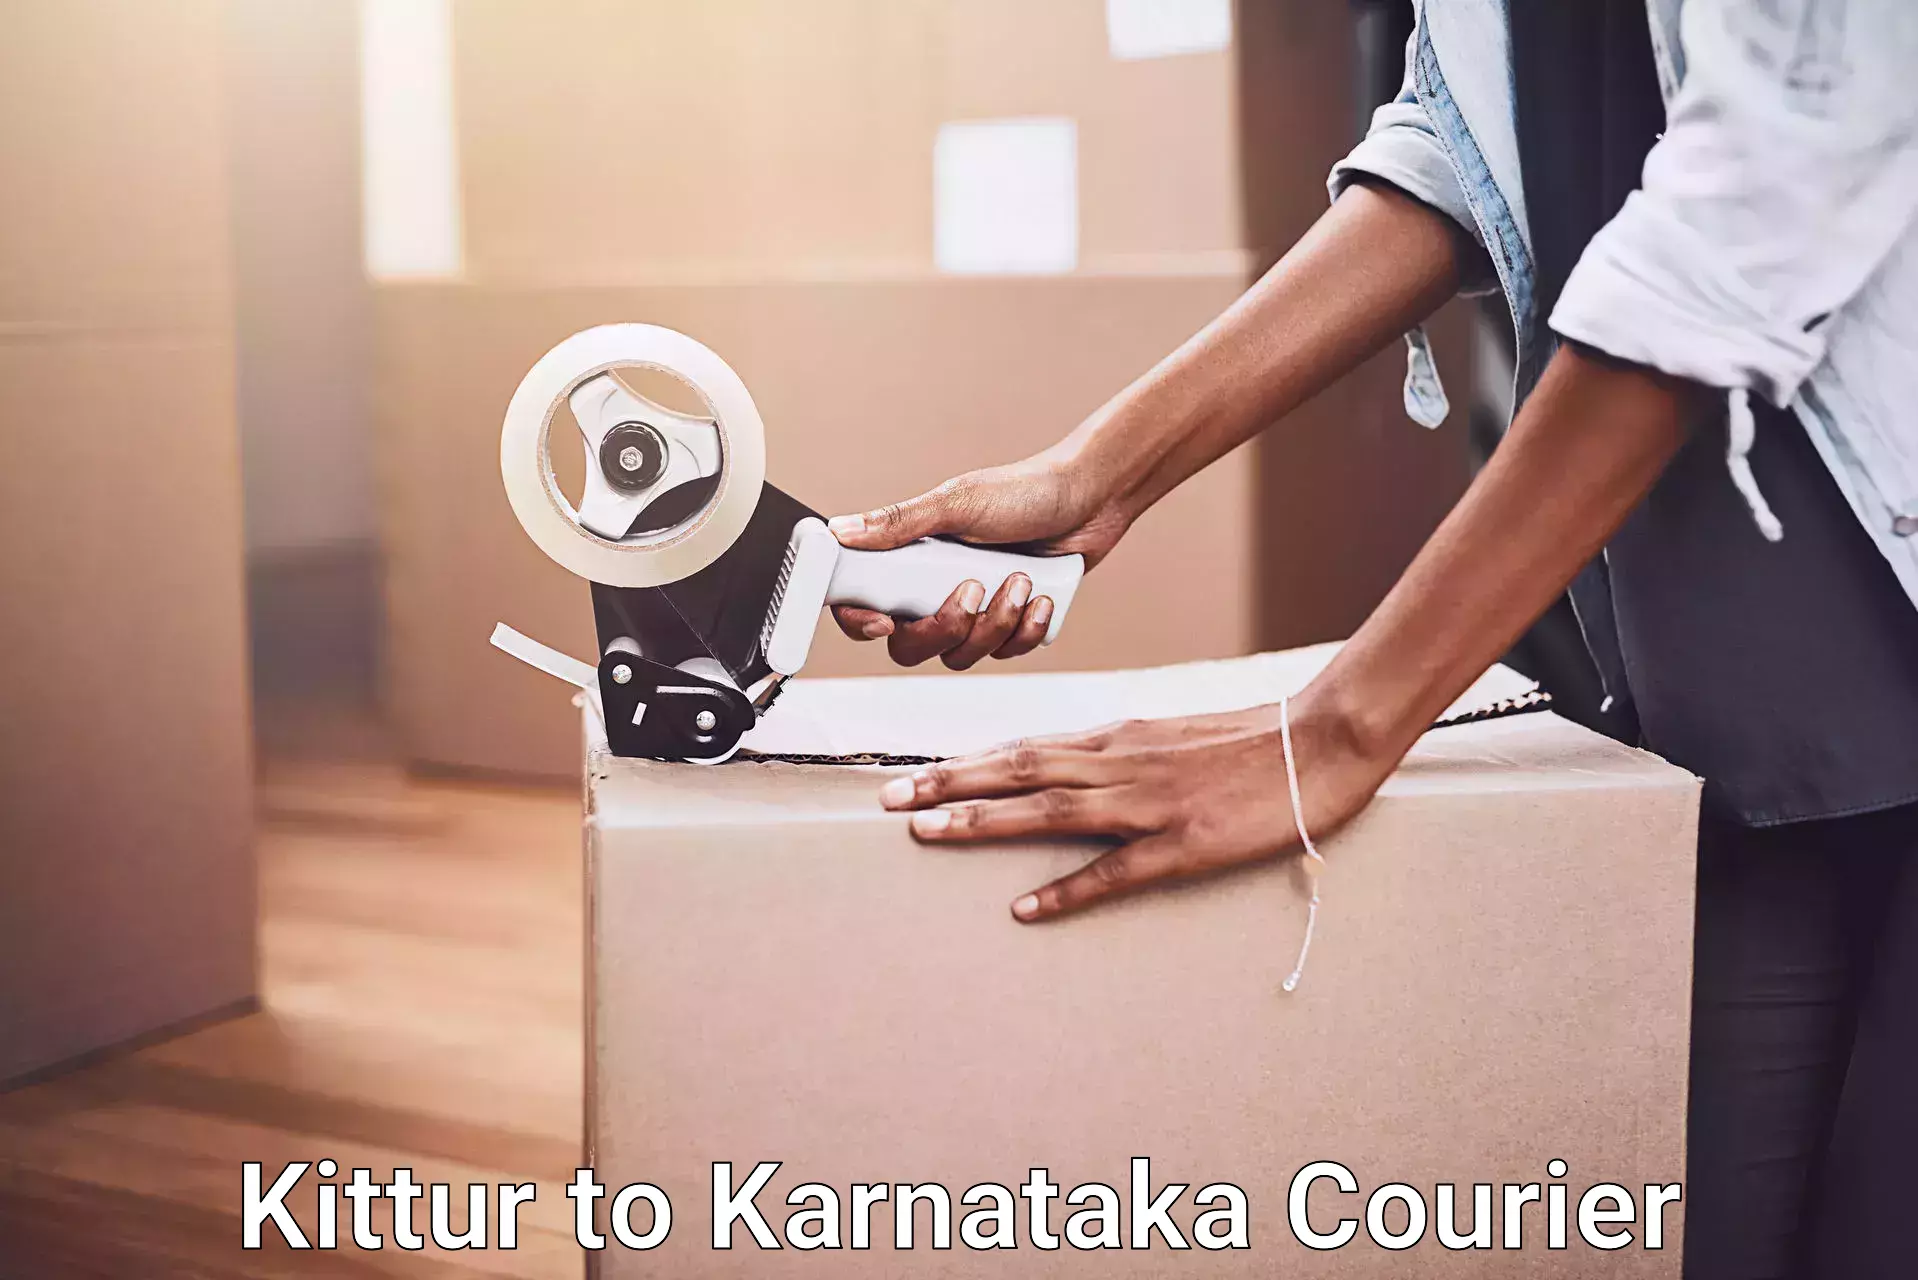 Budget-friendly movers Kittur to Karnataka